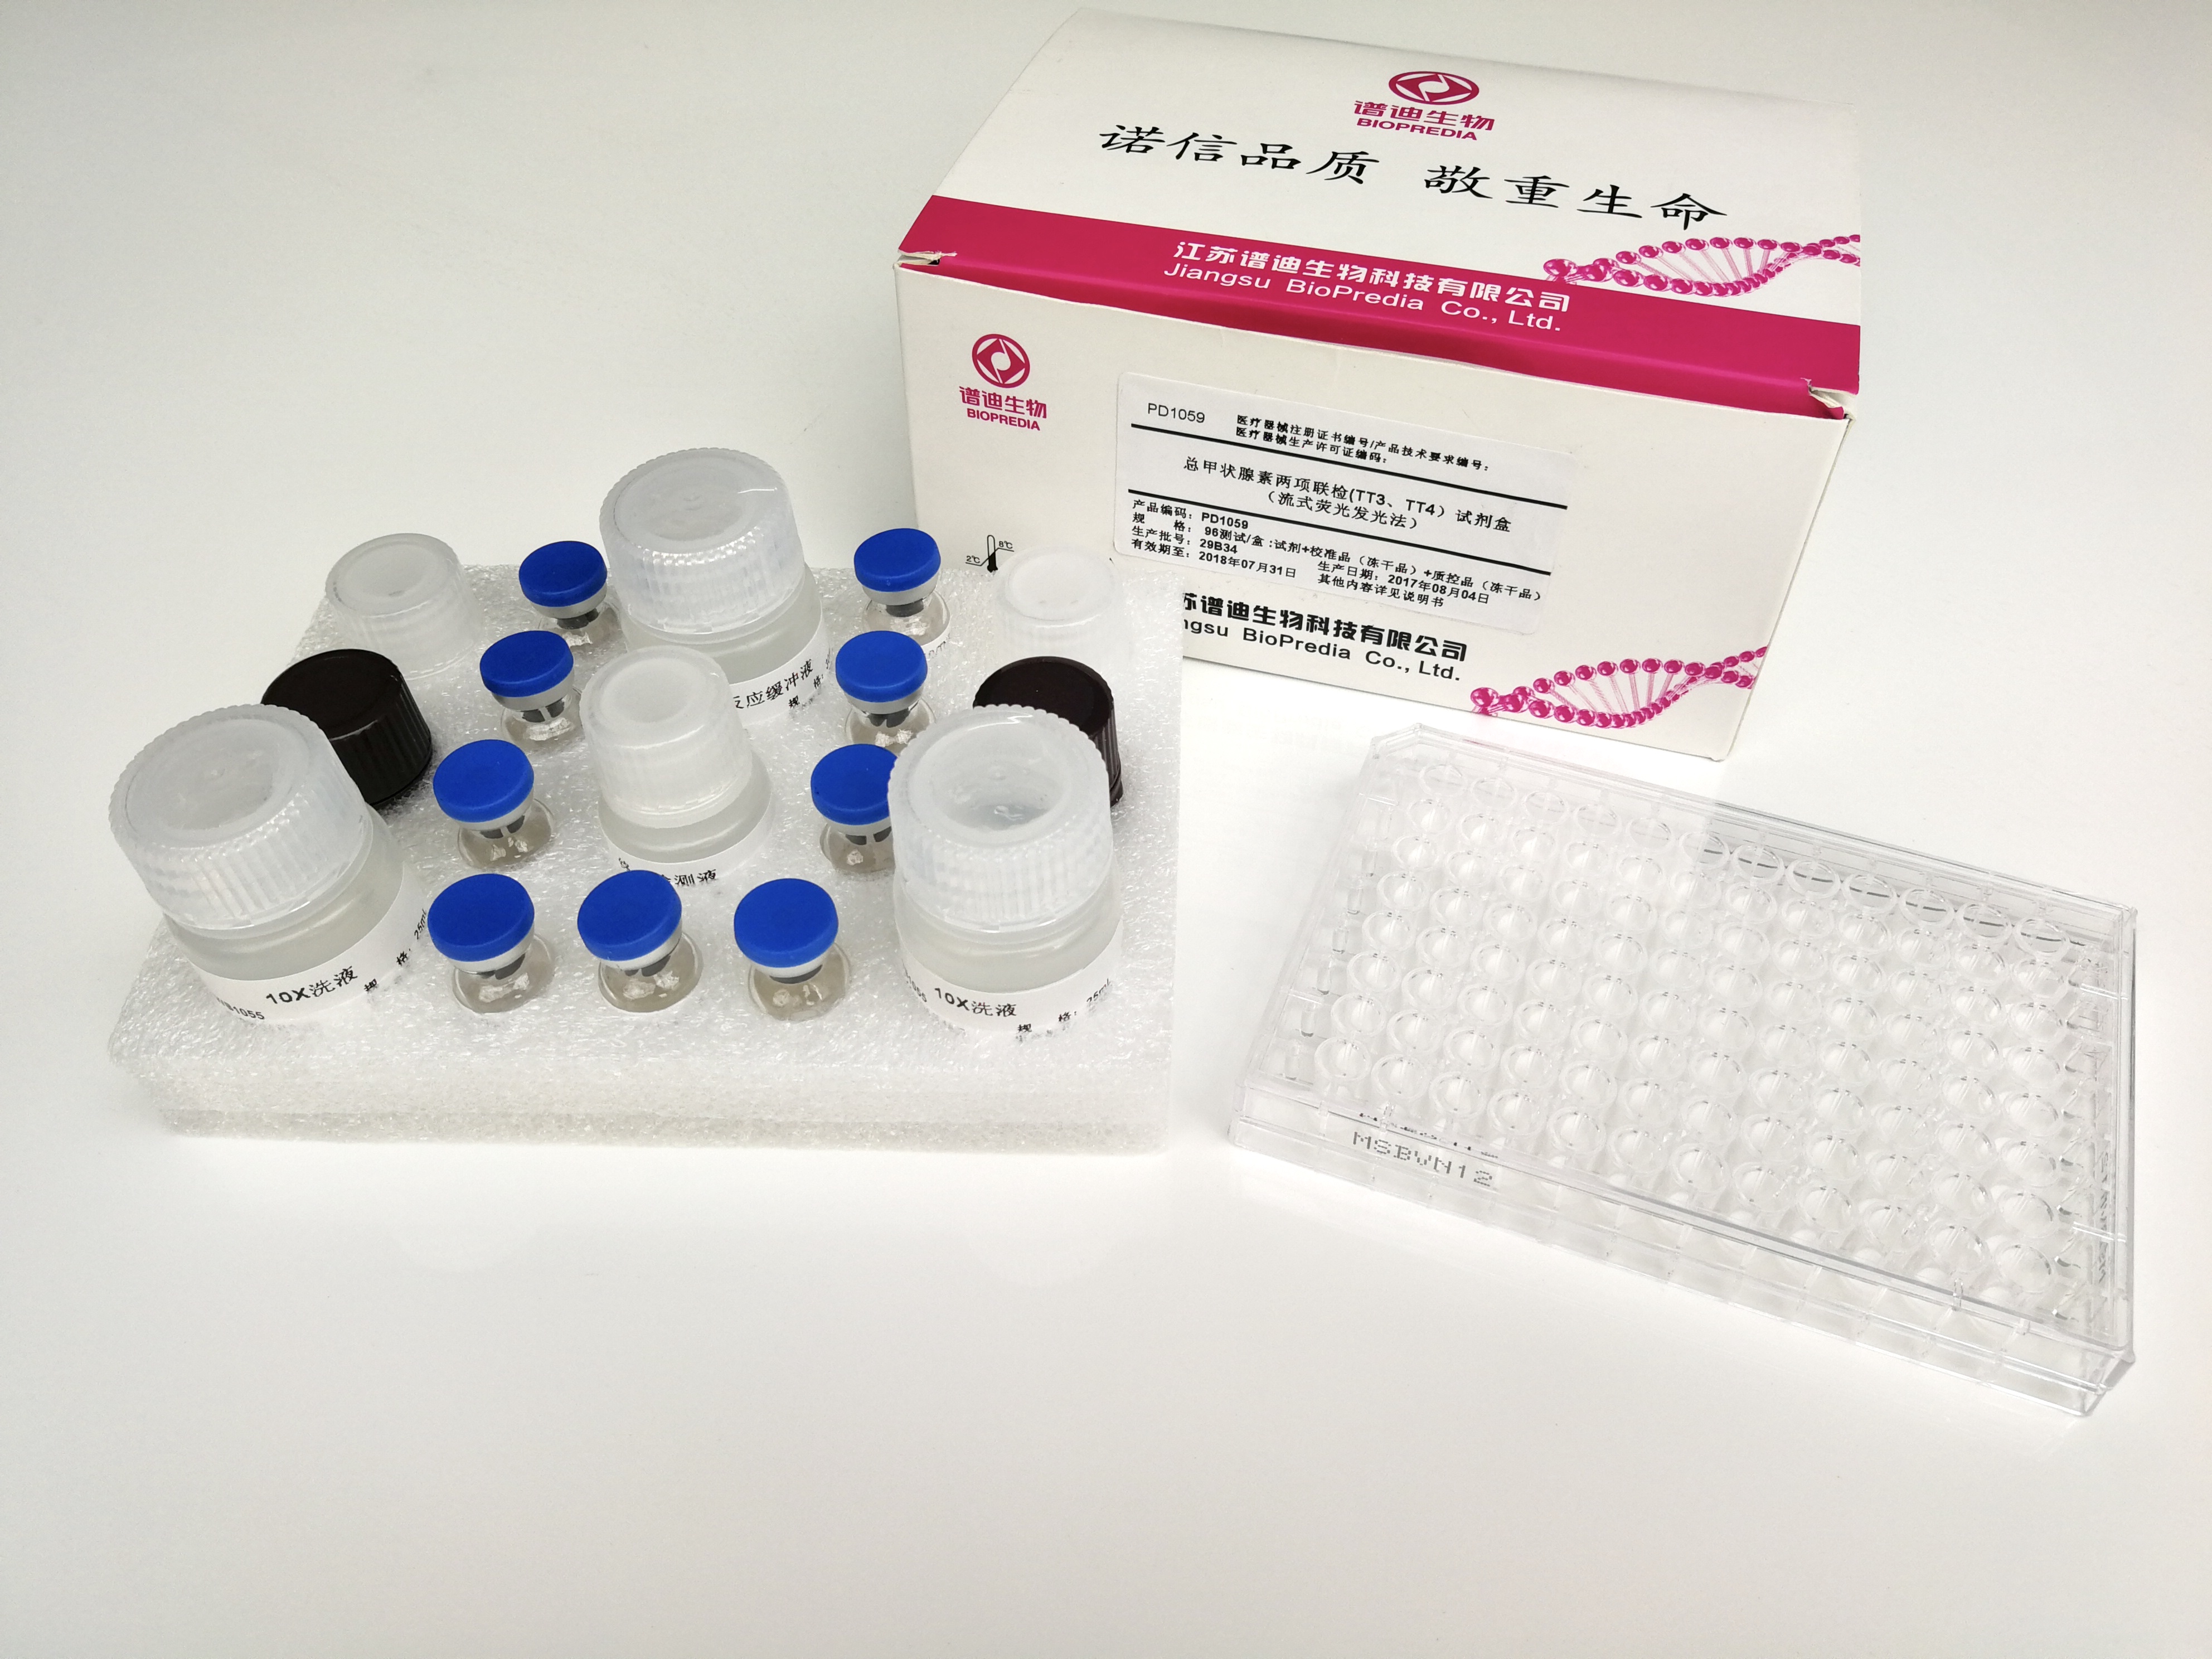 【BIOPREDIA】总甲状腺素两项联检试剂盒（流式荧光发光法）